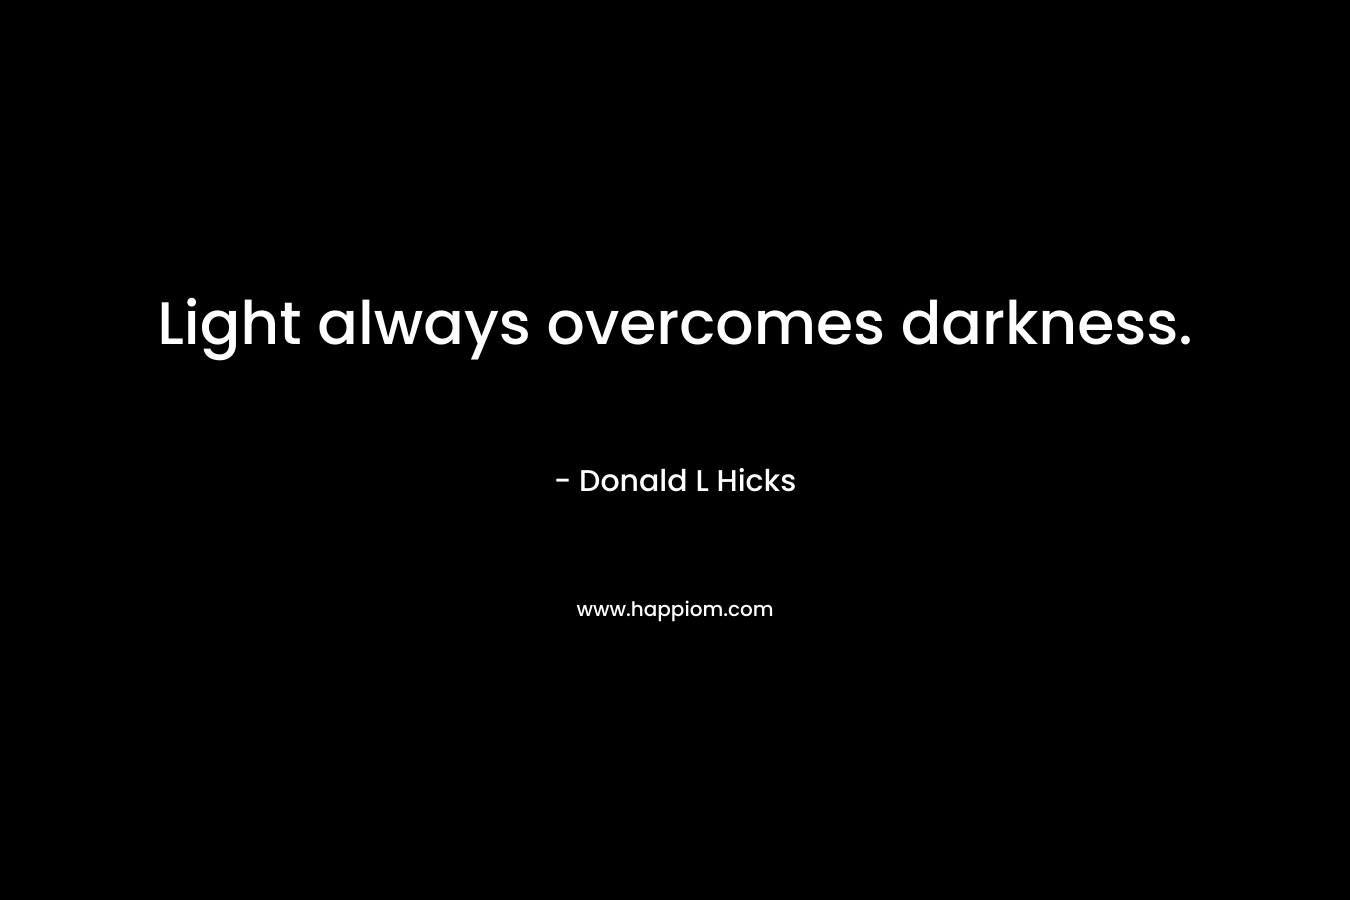 Light always overcomes darkness.